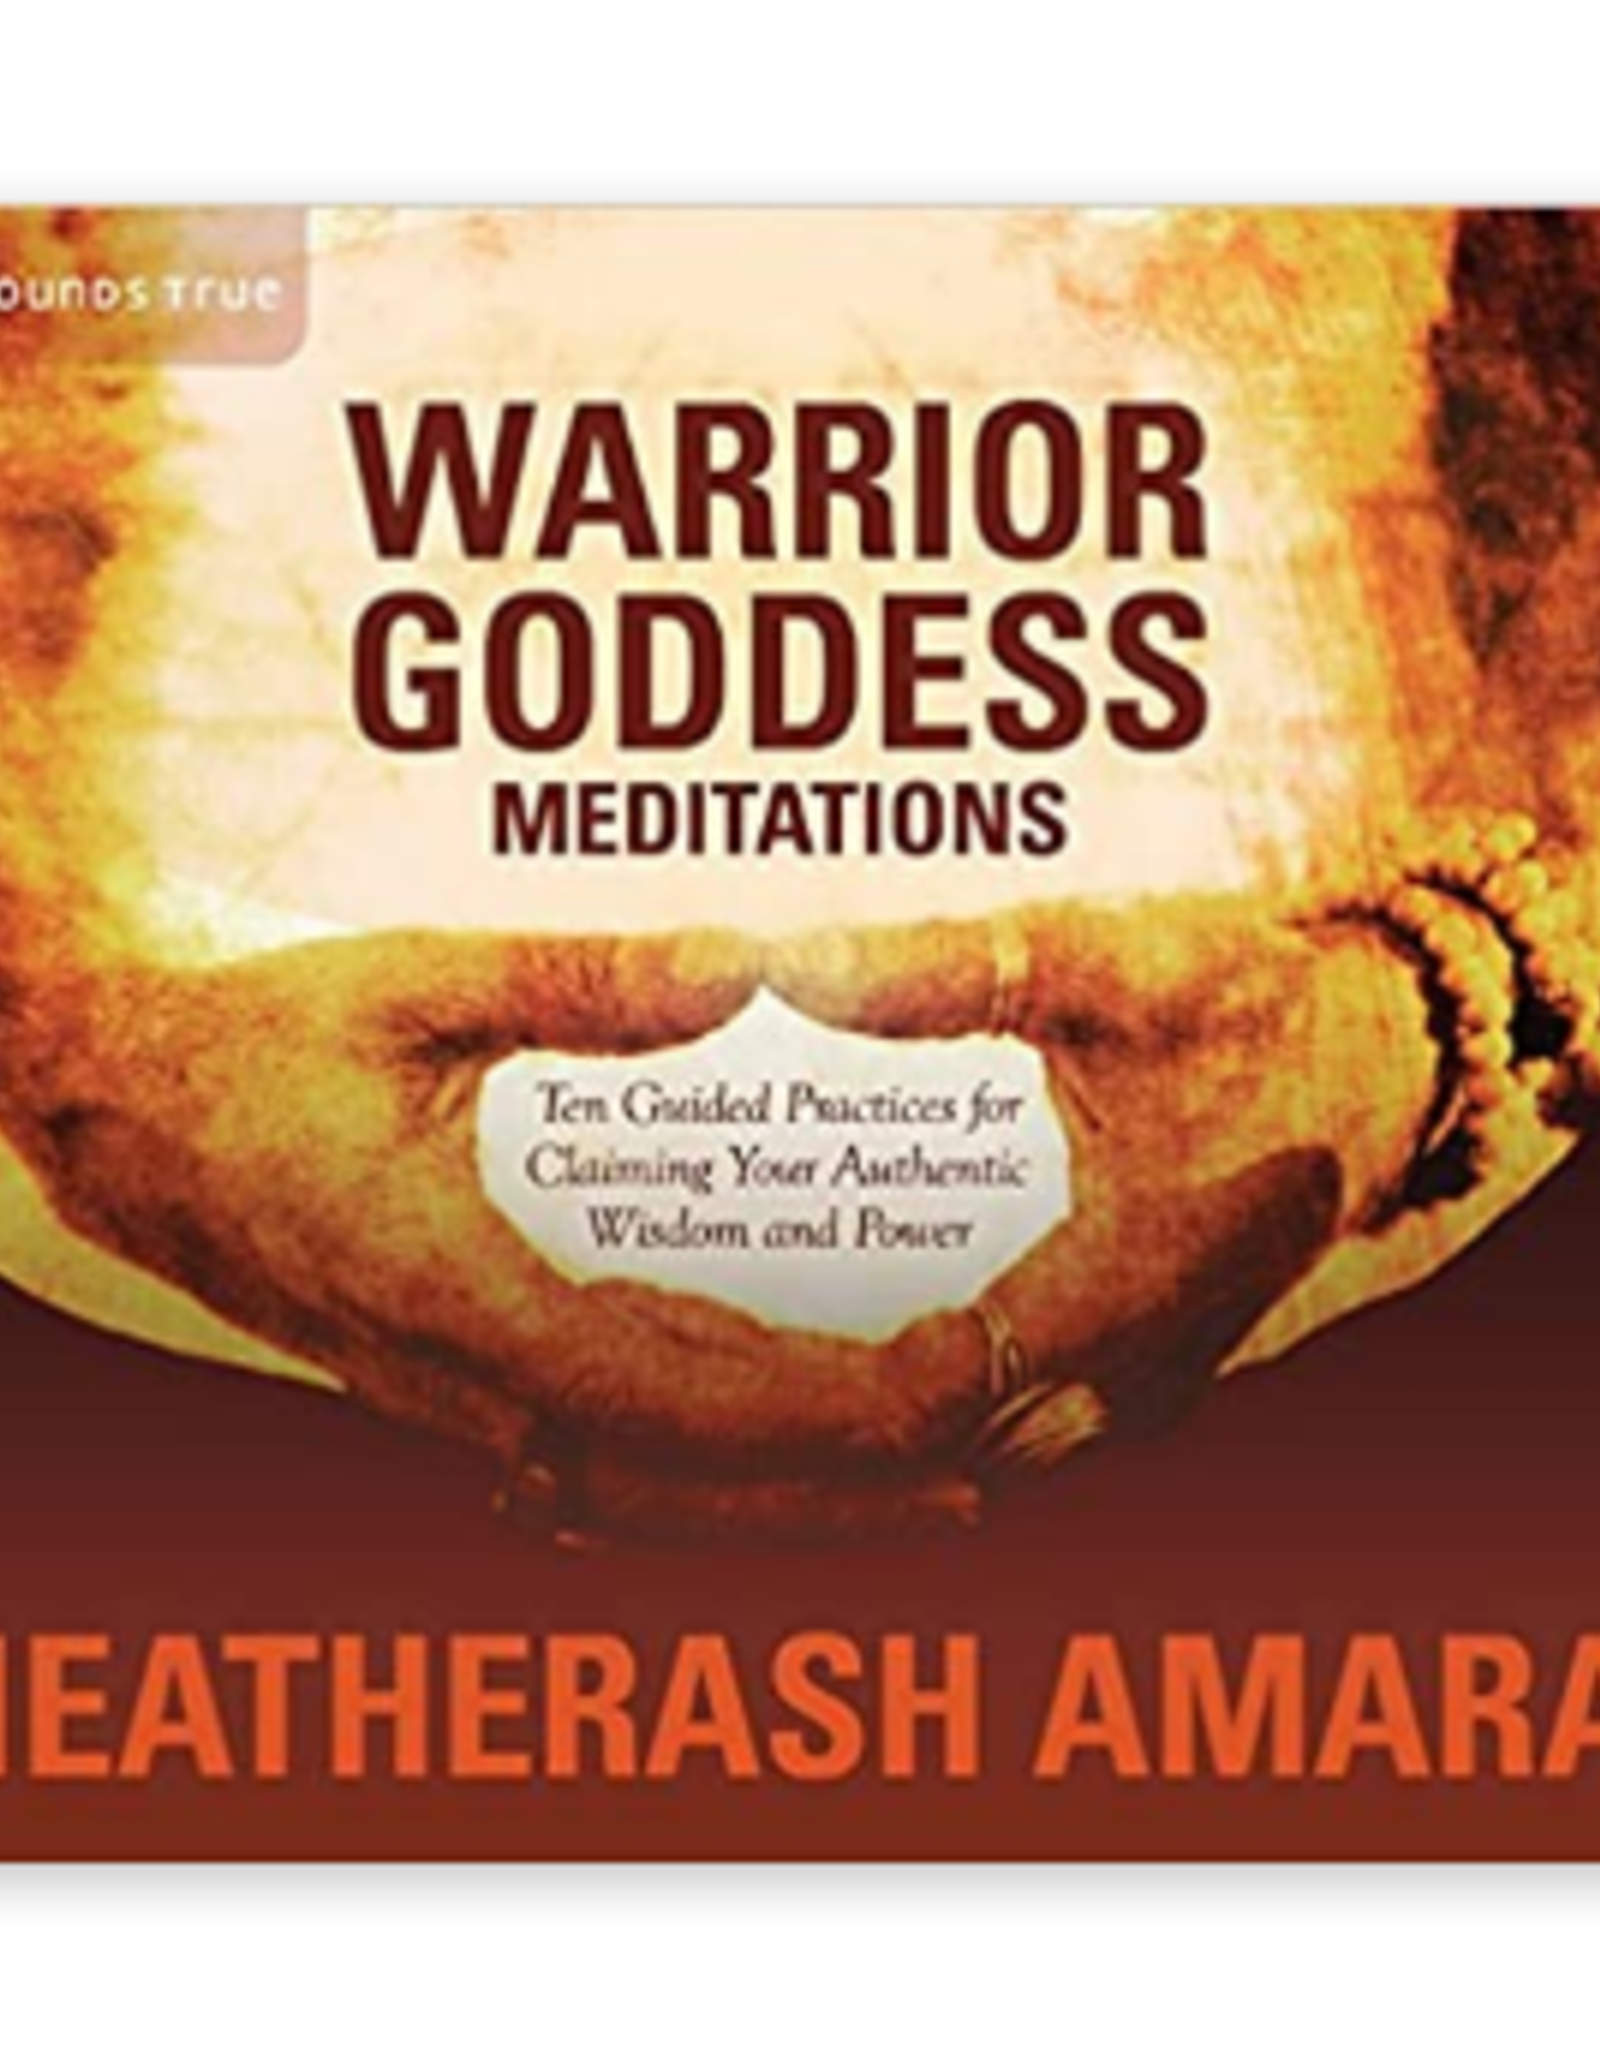 Heatherash Amara Warrior Goddess CD's by Heatherash Amara